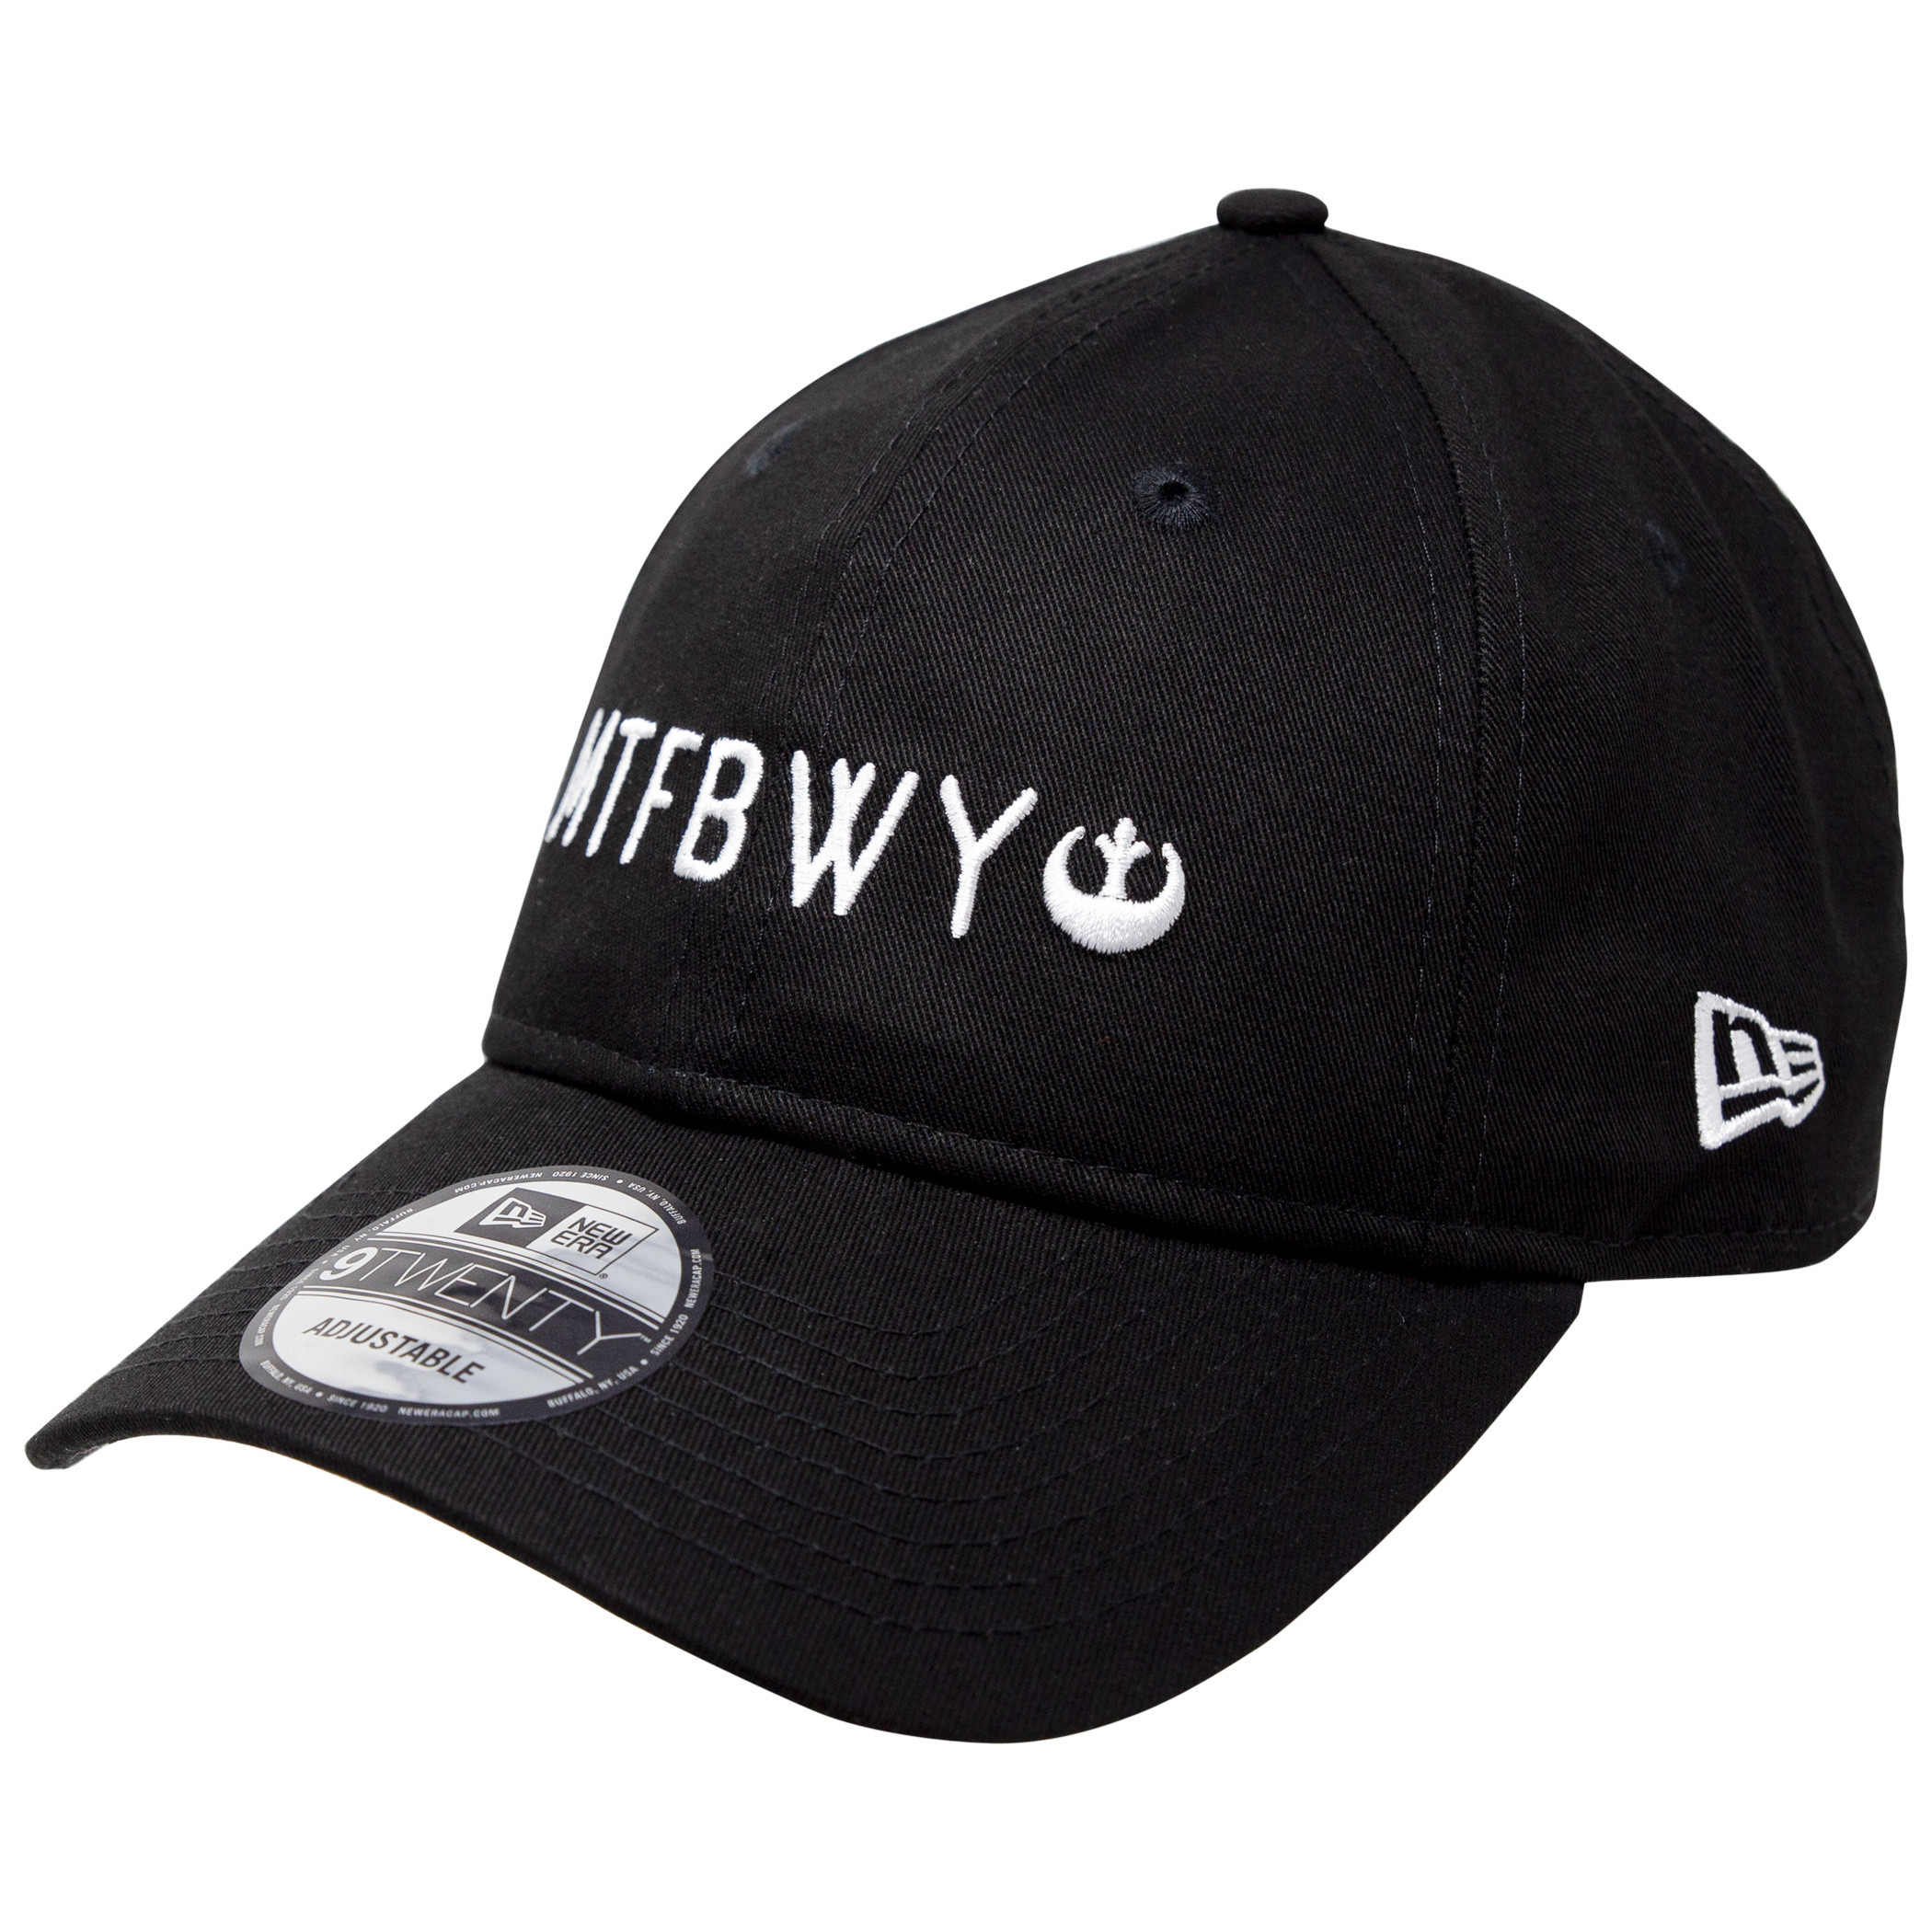 Star Wars "MTFBWY" New Era 9Twenty Adjustable Dad Hat